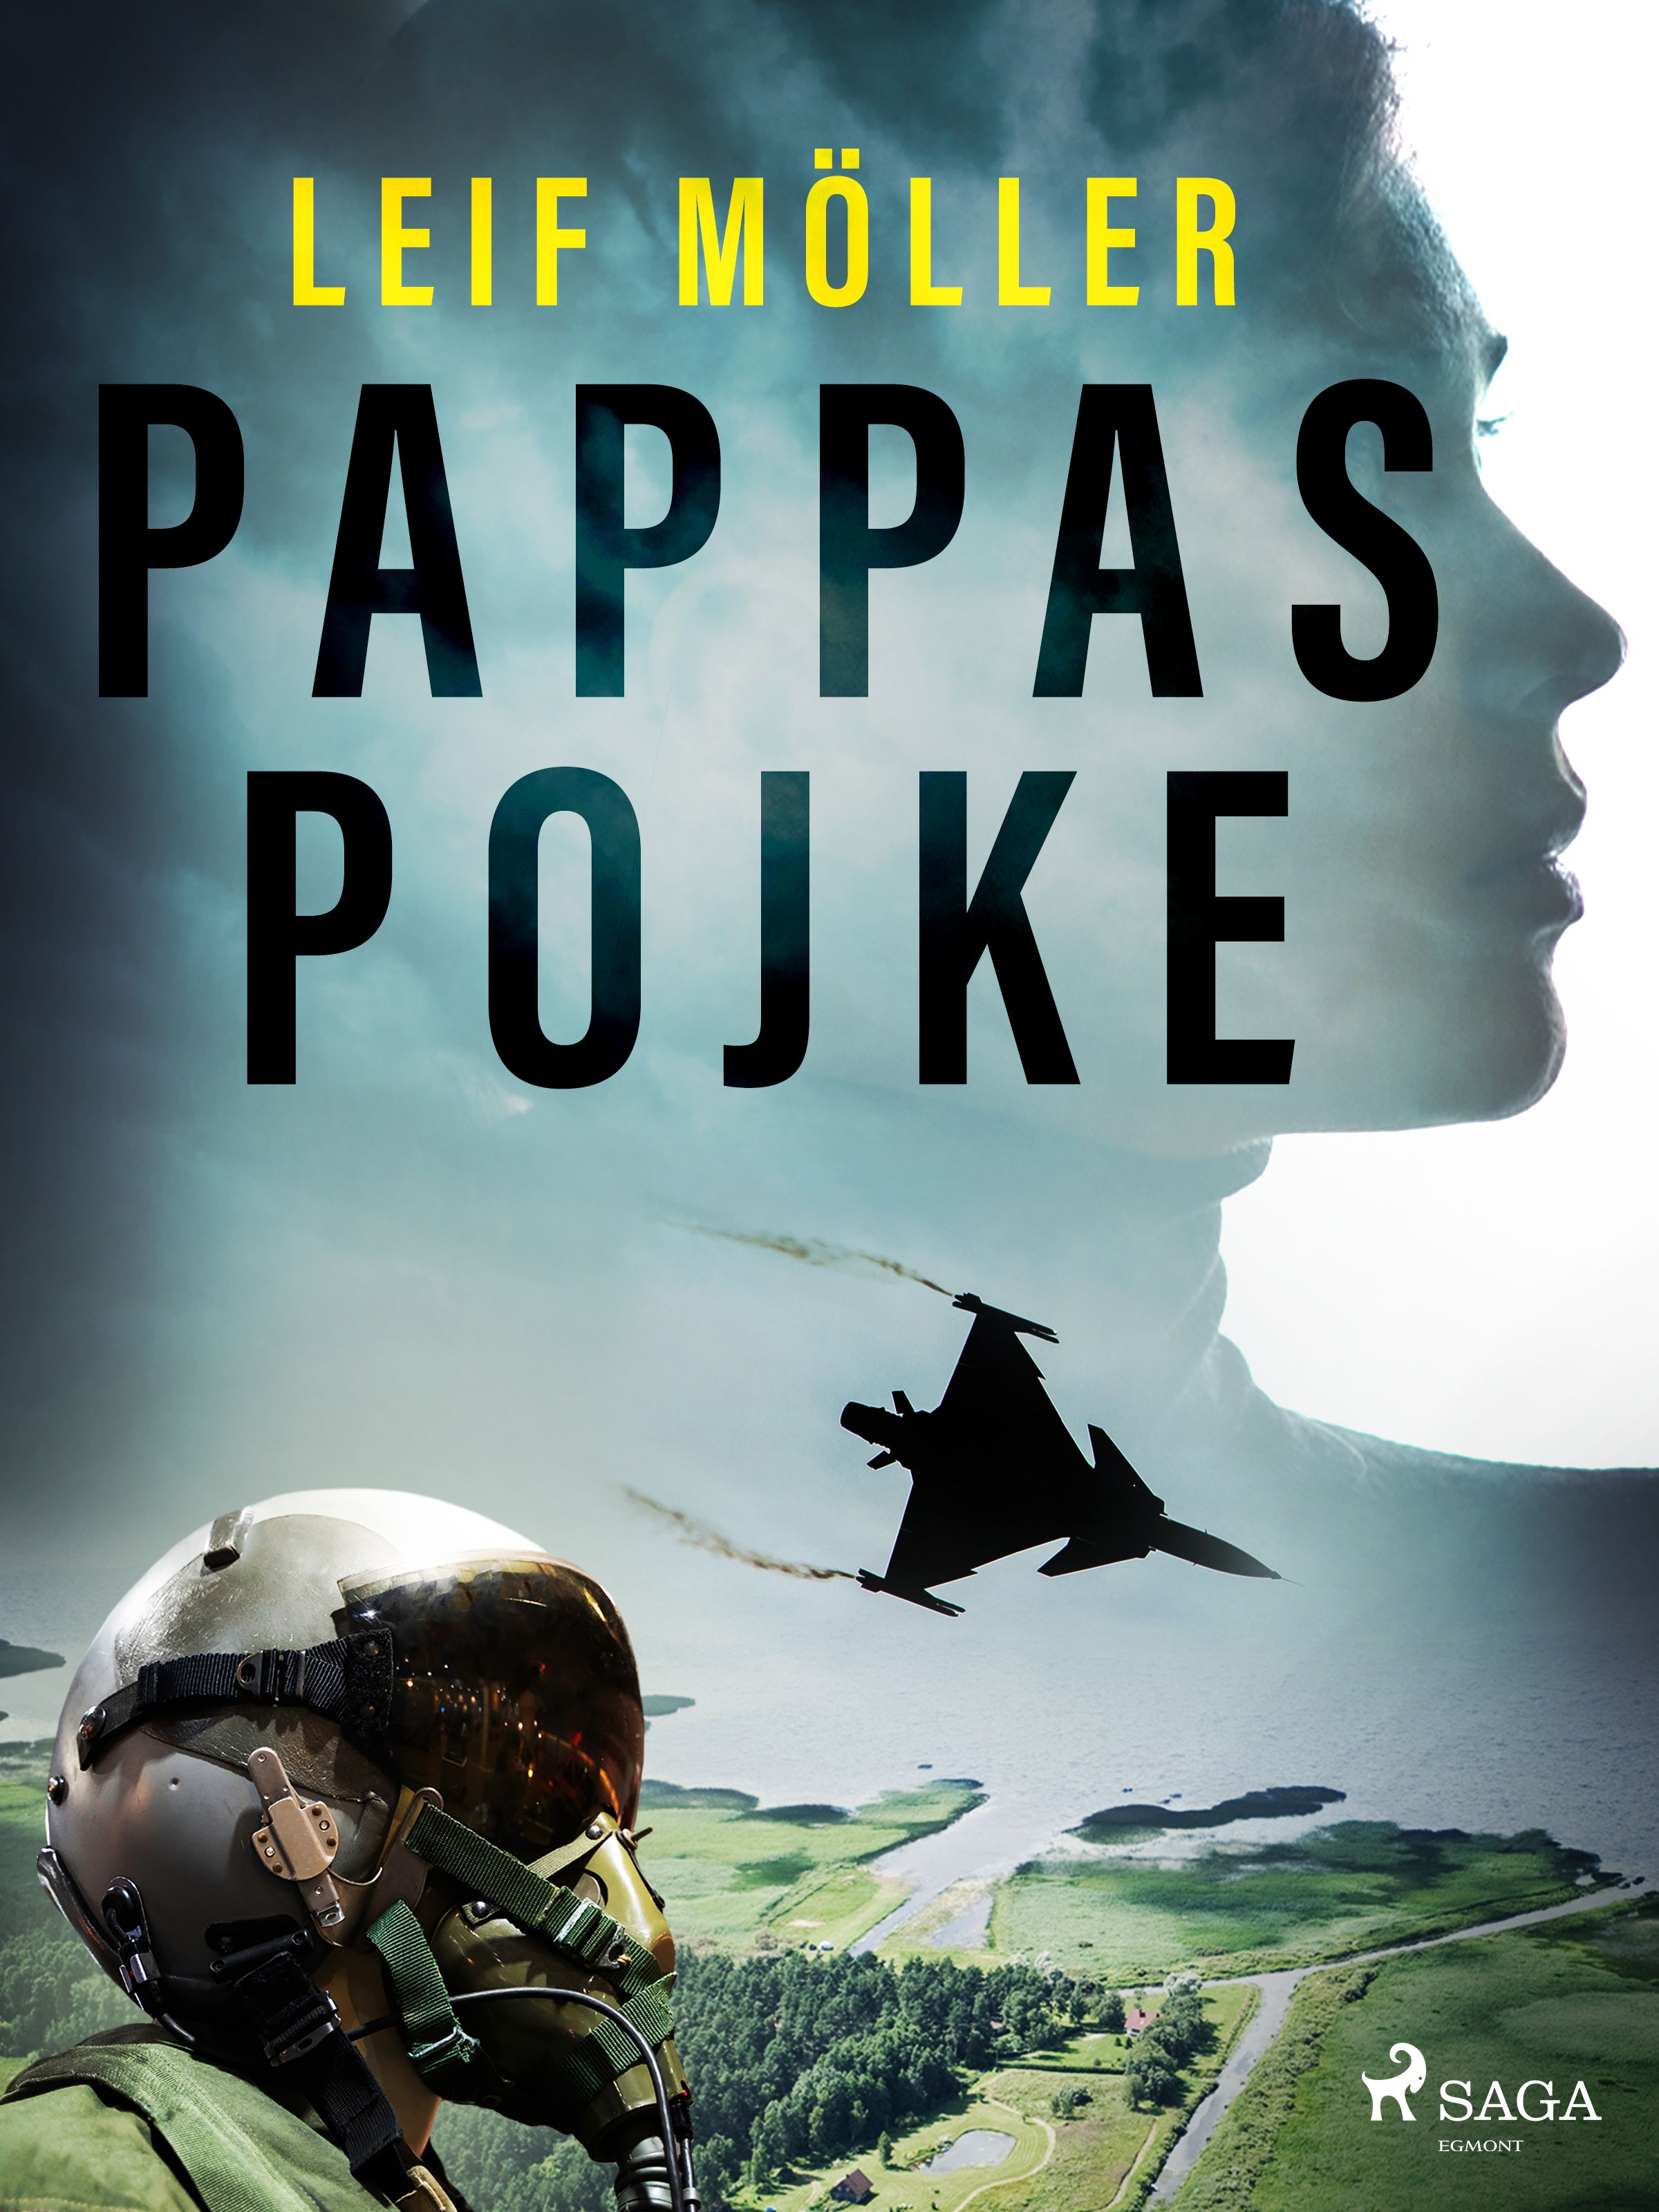 Pappas pojke, eBook by Leif Möller